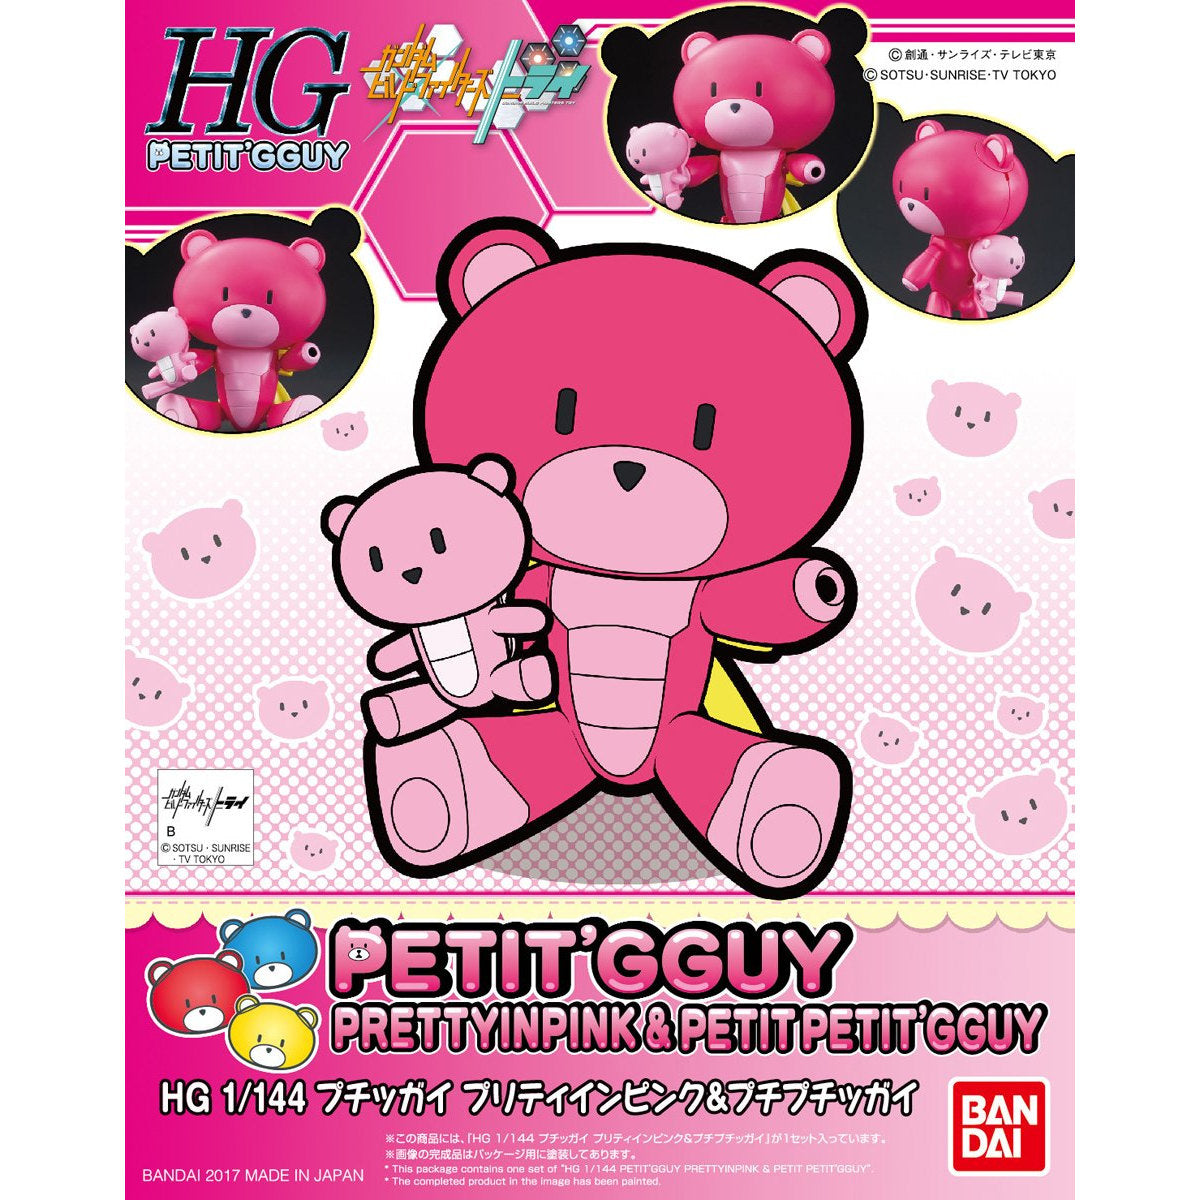 HGPG HG 1/144 Petit'gguy Prettyinpink & Petit Petit'gguy